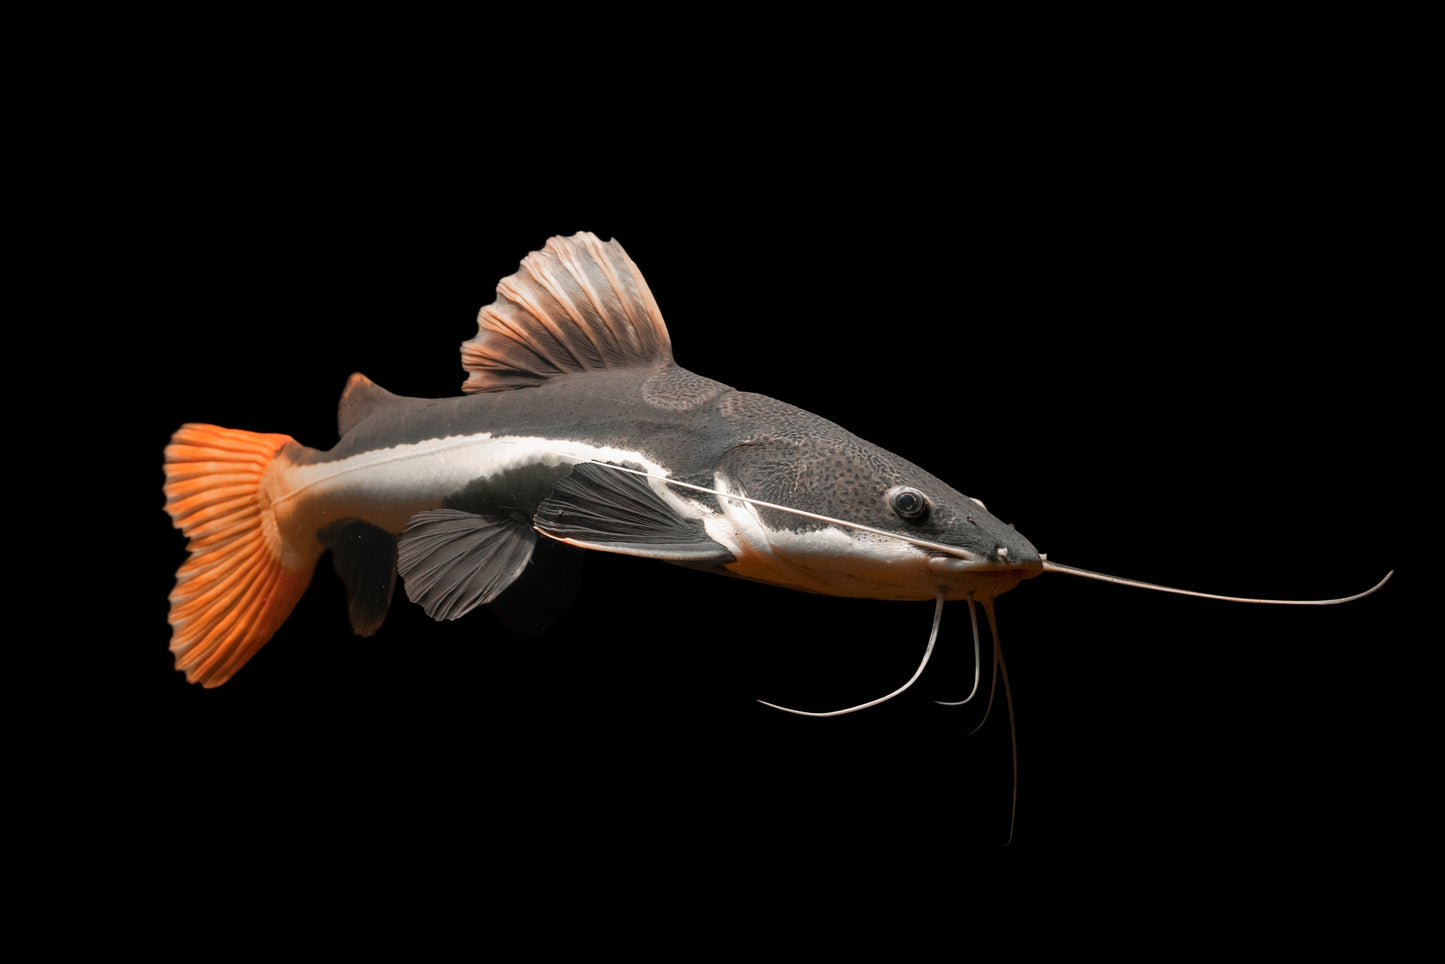 Short Body Redtail Catfish (Phractocephalus hemioliopterus